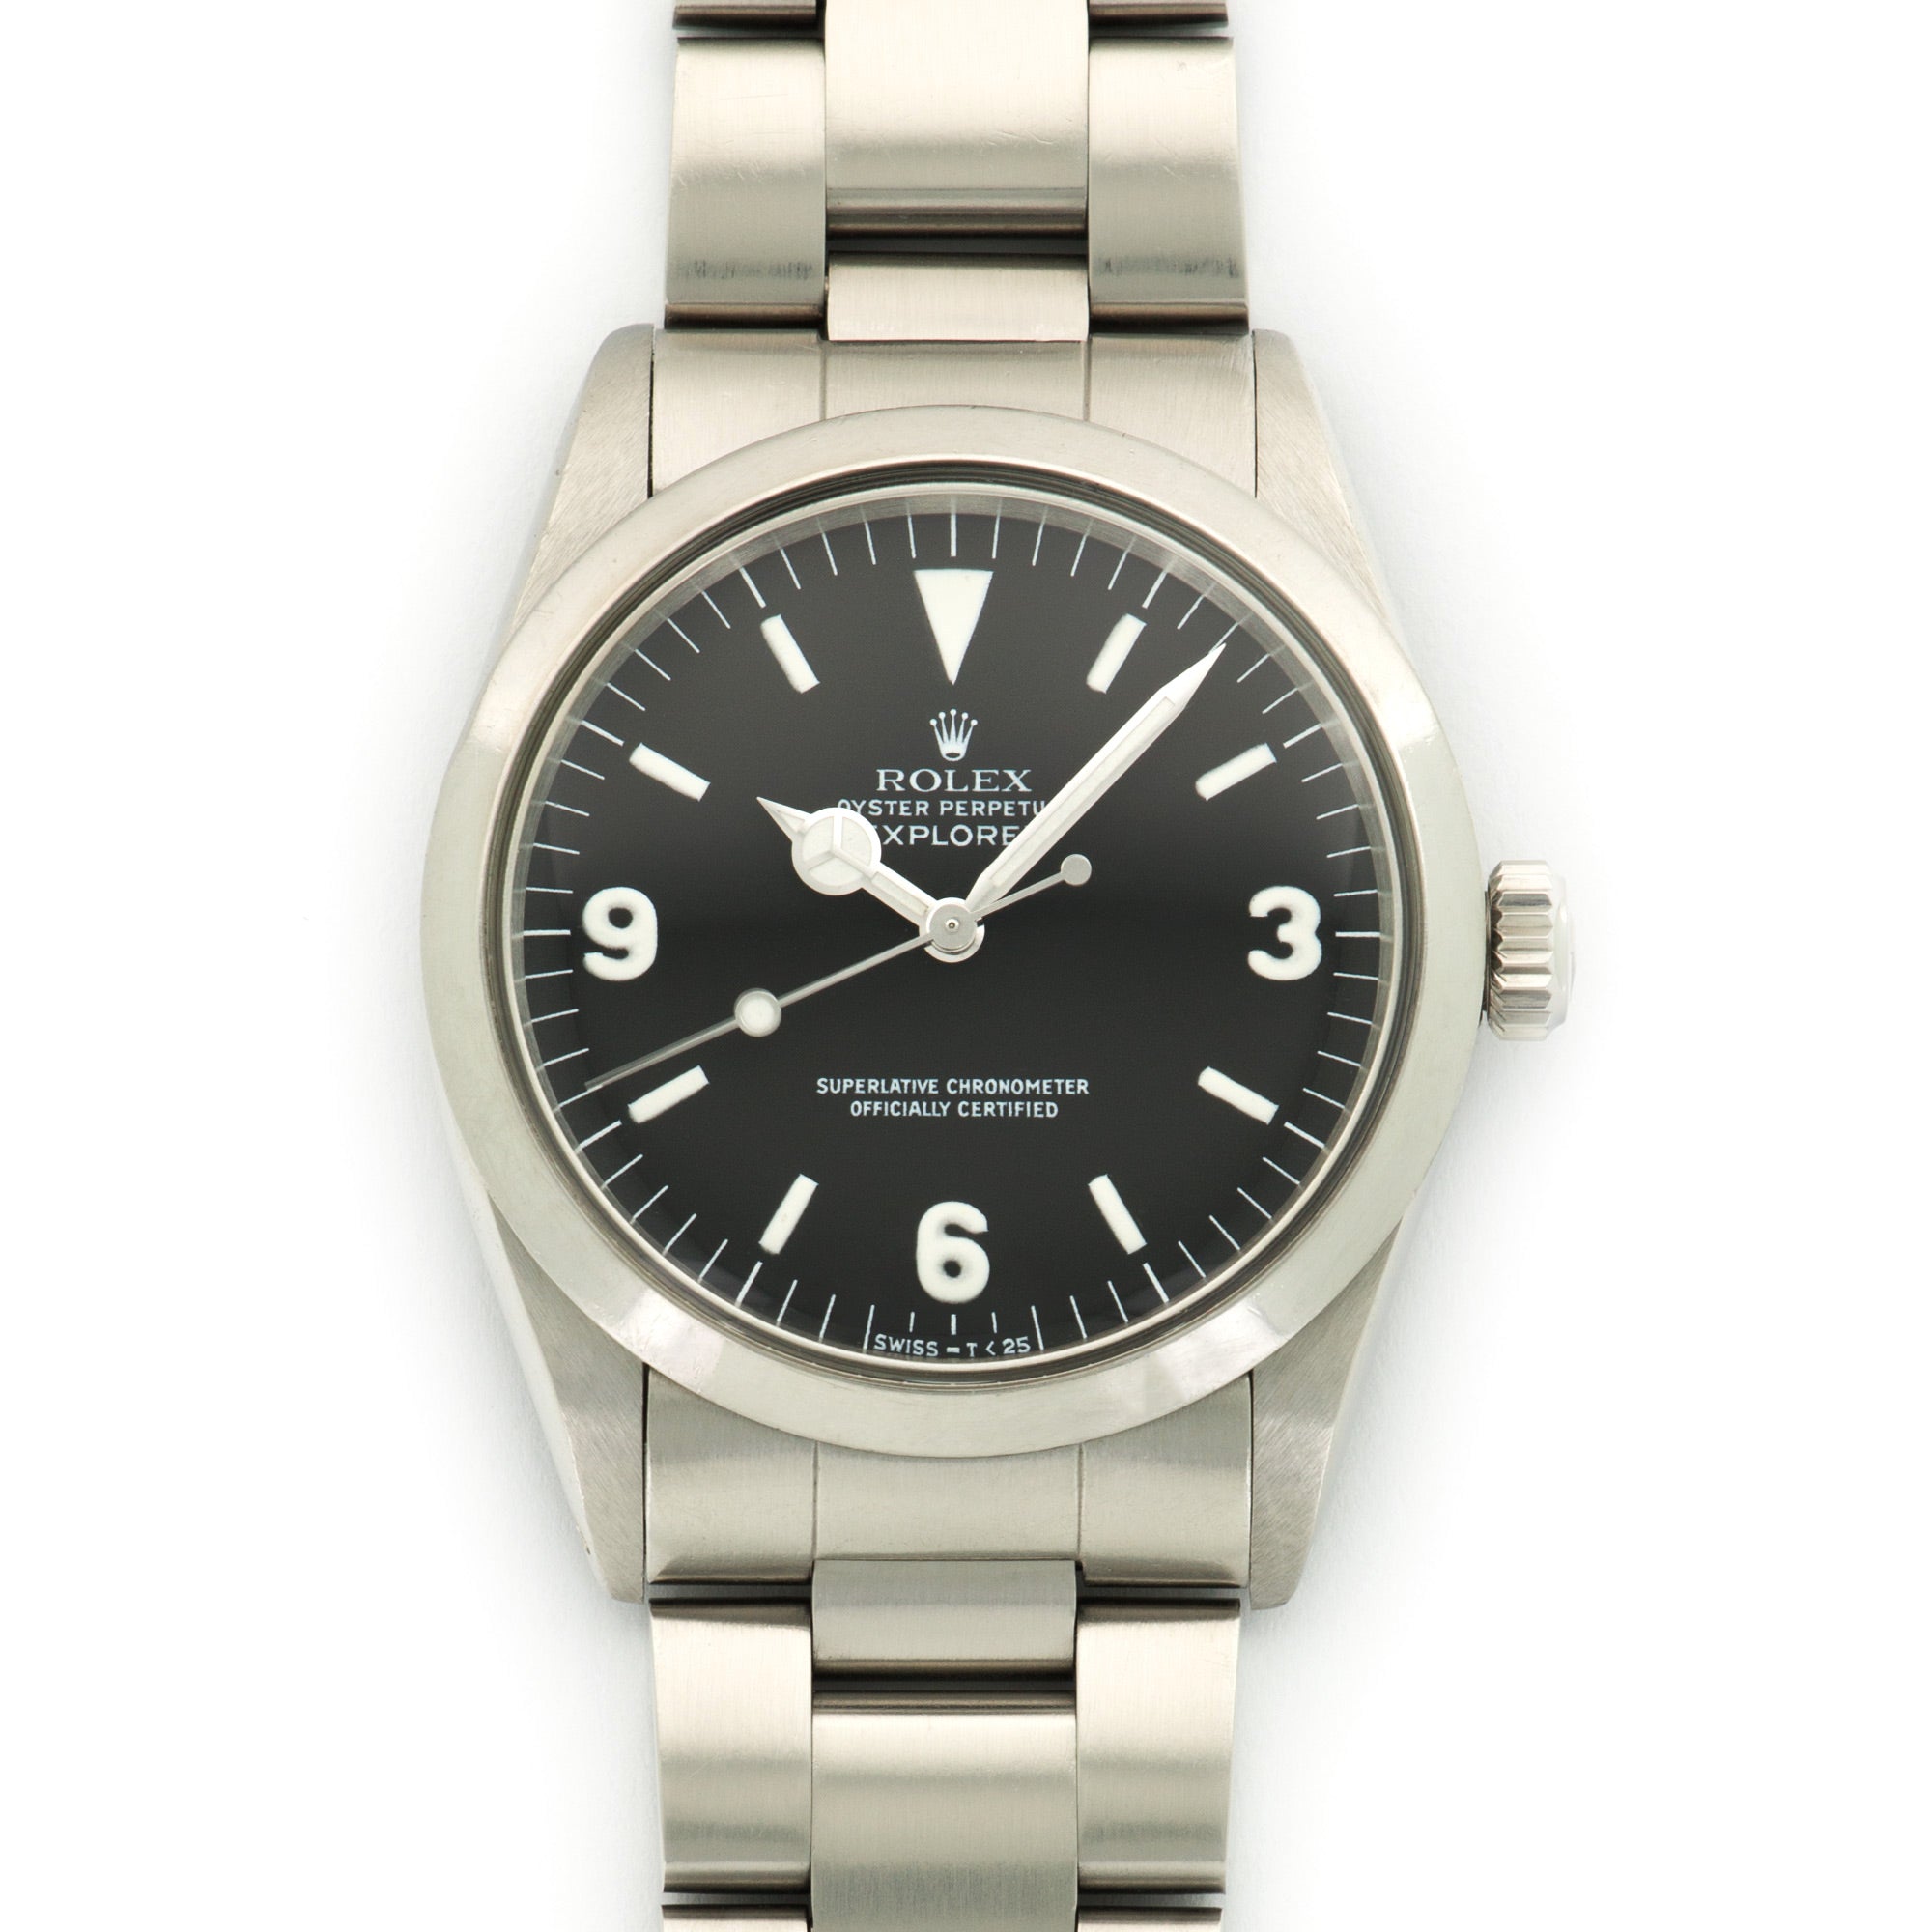 Rolex - Rolex Explorer L-Series Watch Ref. 1016 with Paper - The Keystone Watches